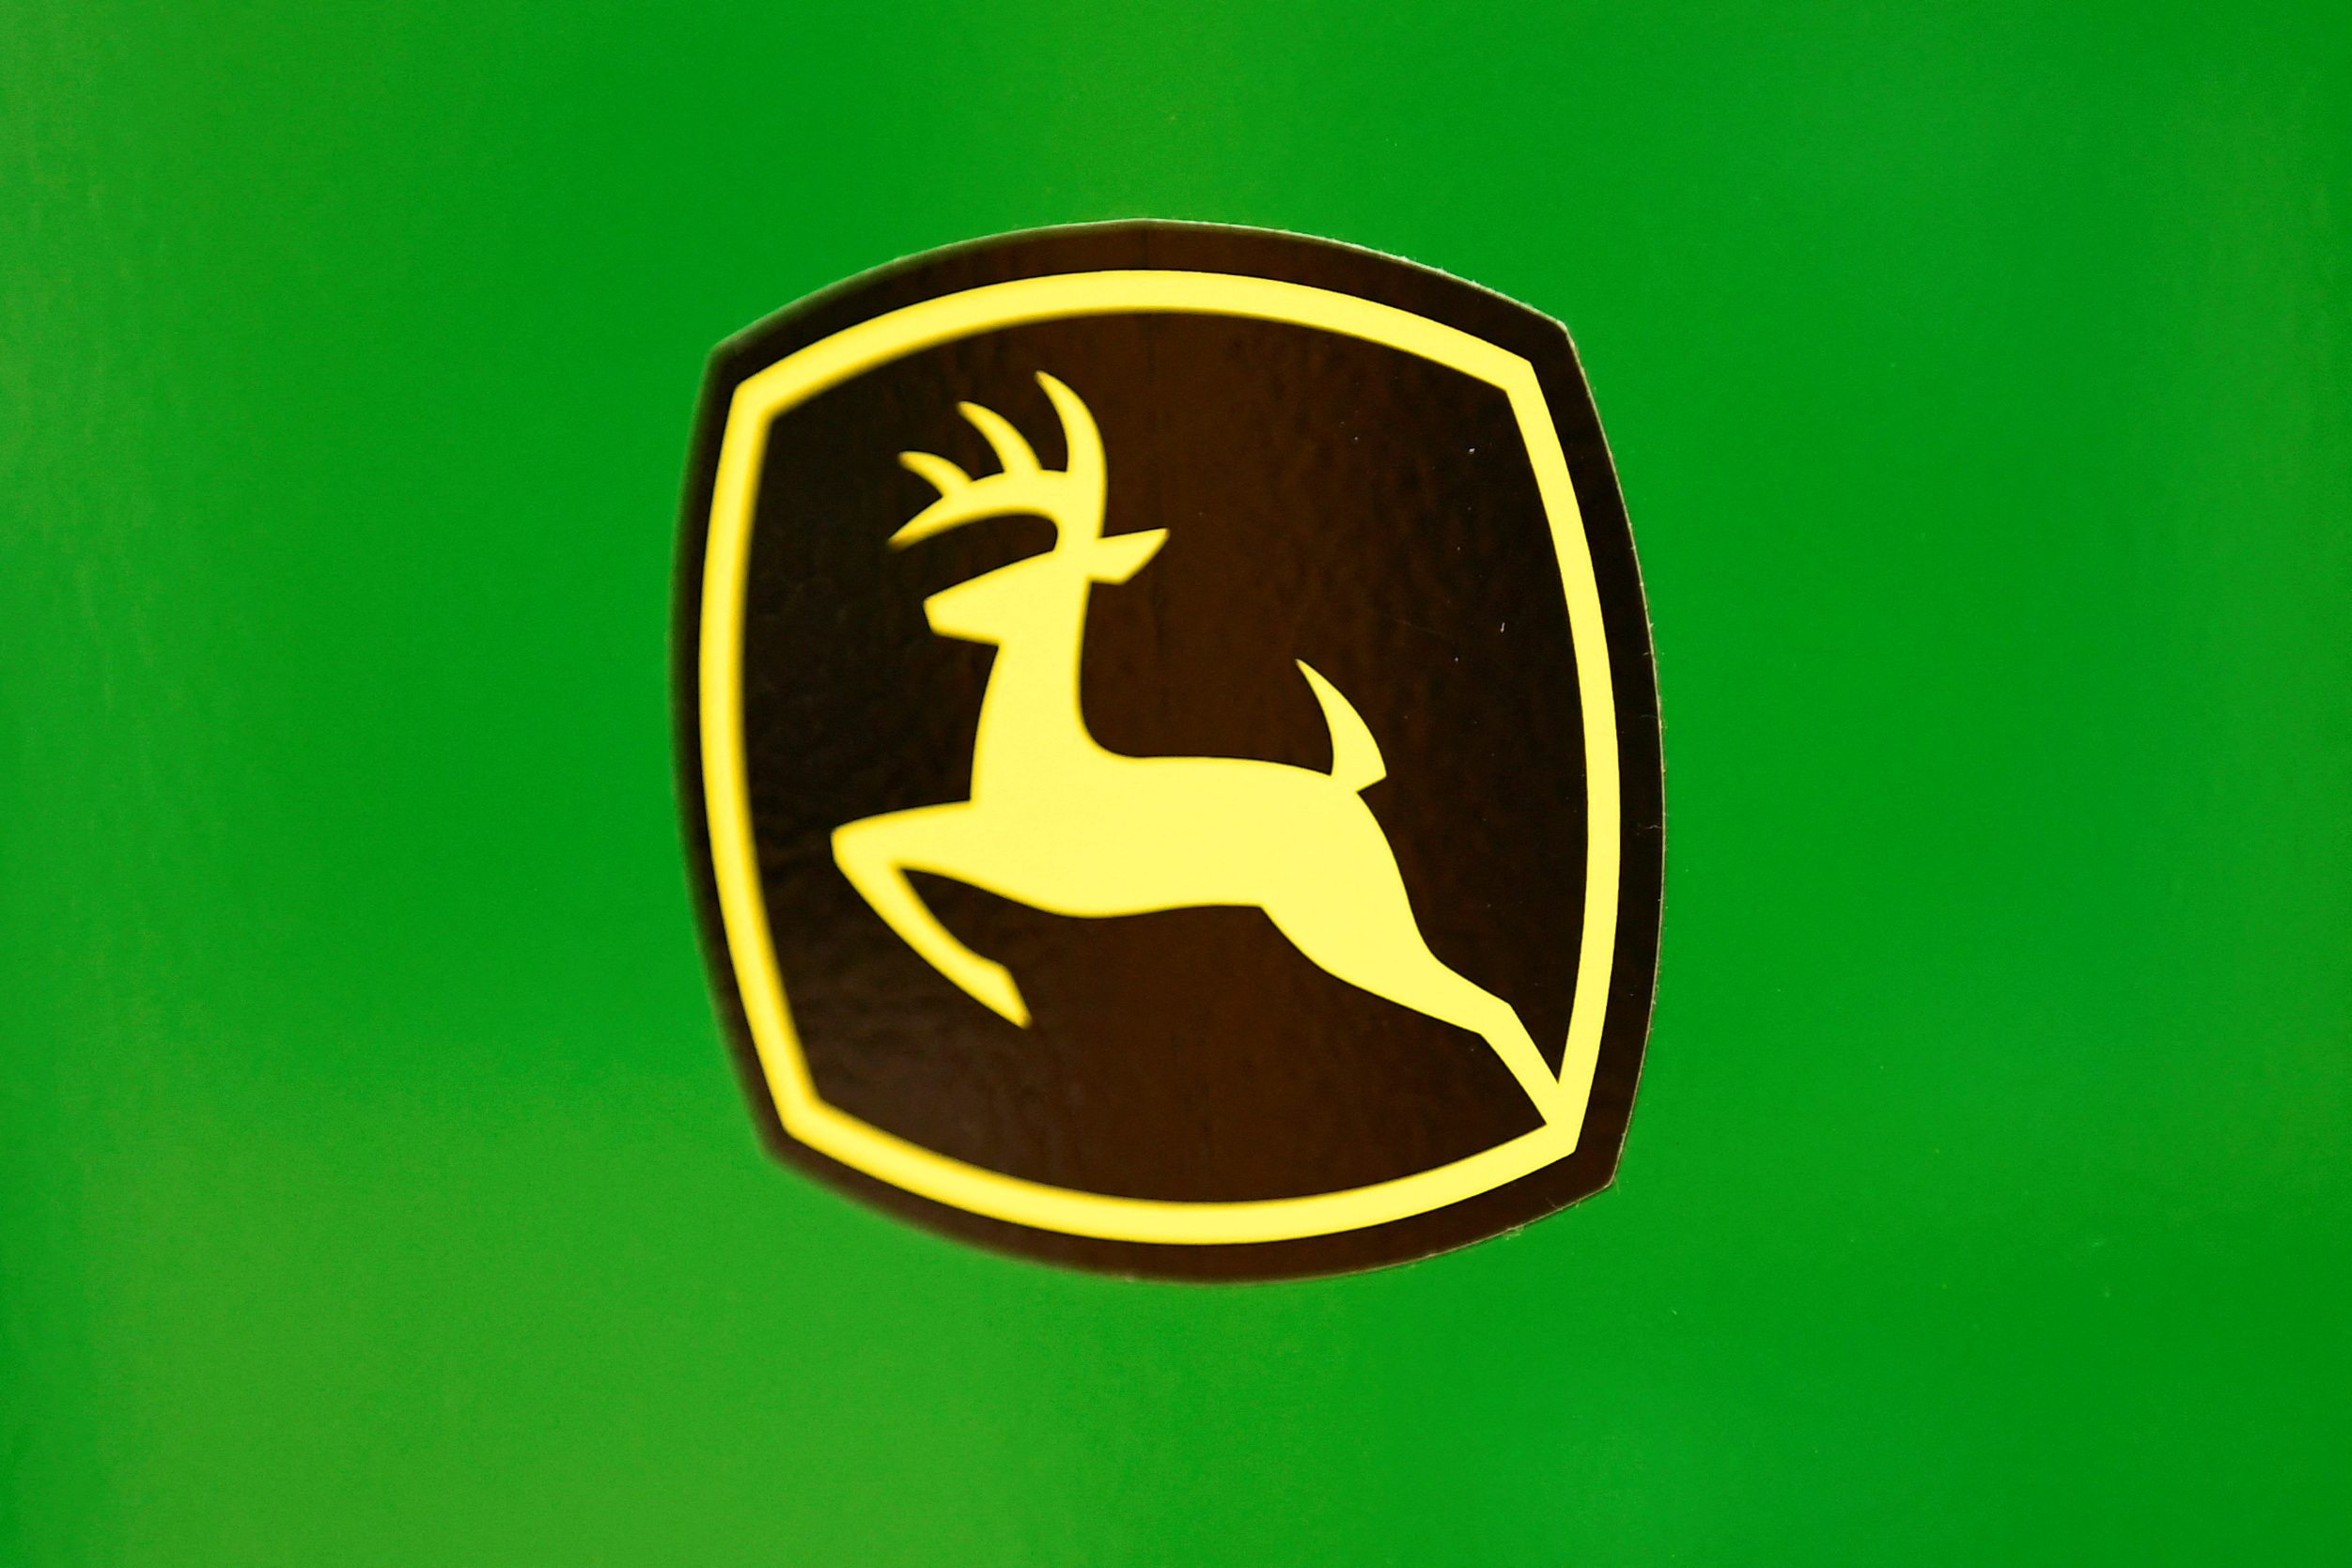 The evolution of the John Deere logo and brand - The Latest John